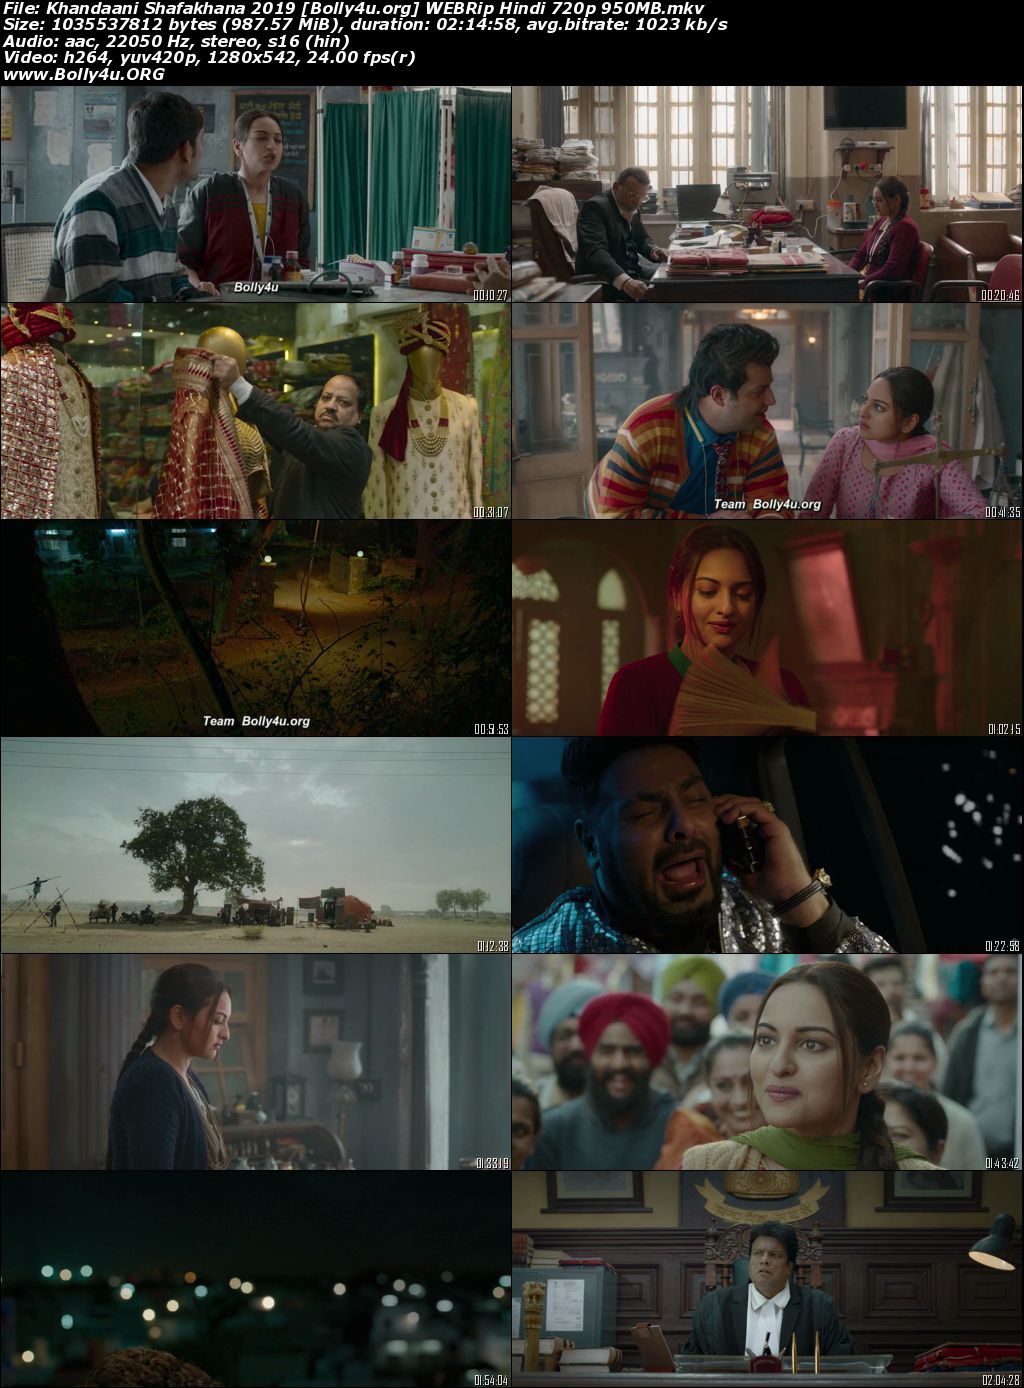 Khandaani Shafakhana 2019 WEBRip Hindi Full Movie Download 720p 480p